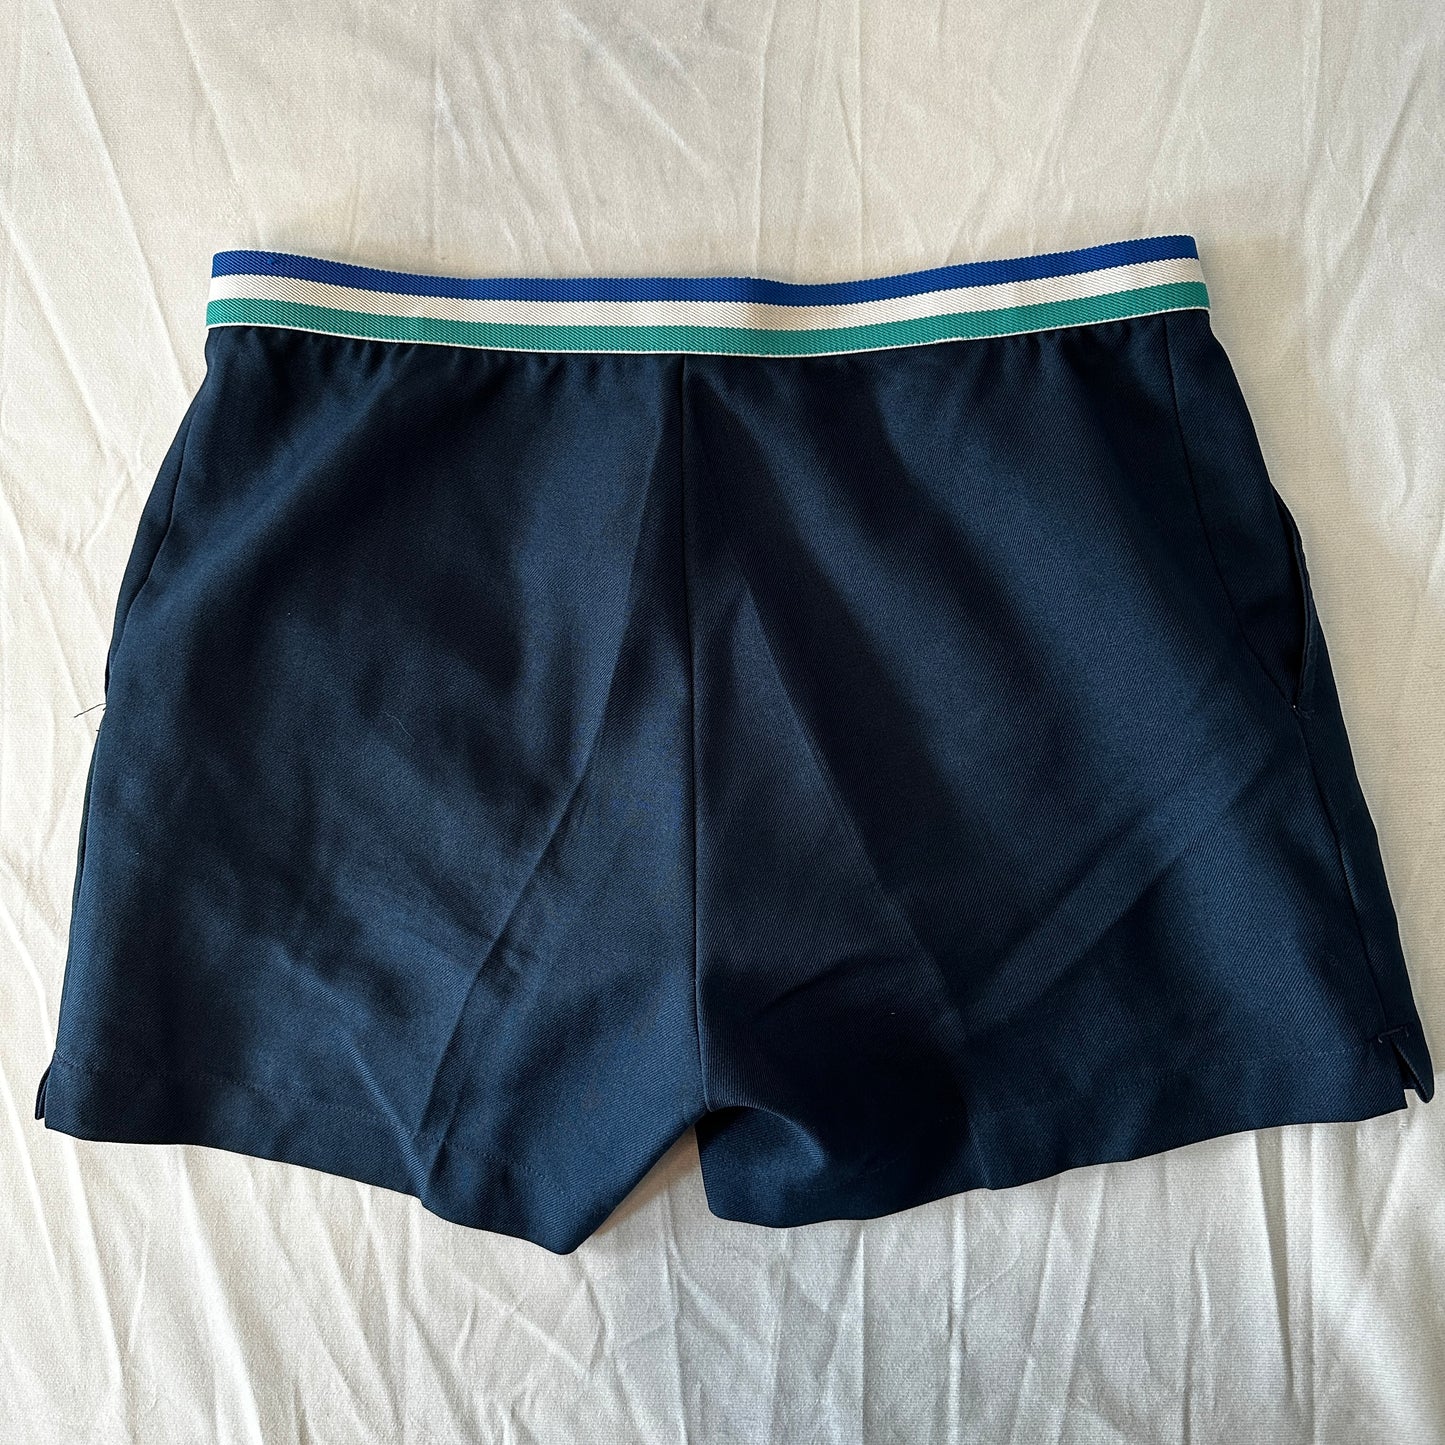 Vintage Tennis Shorts - M